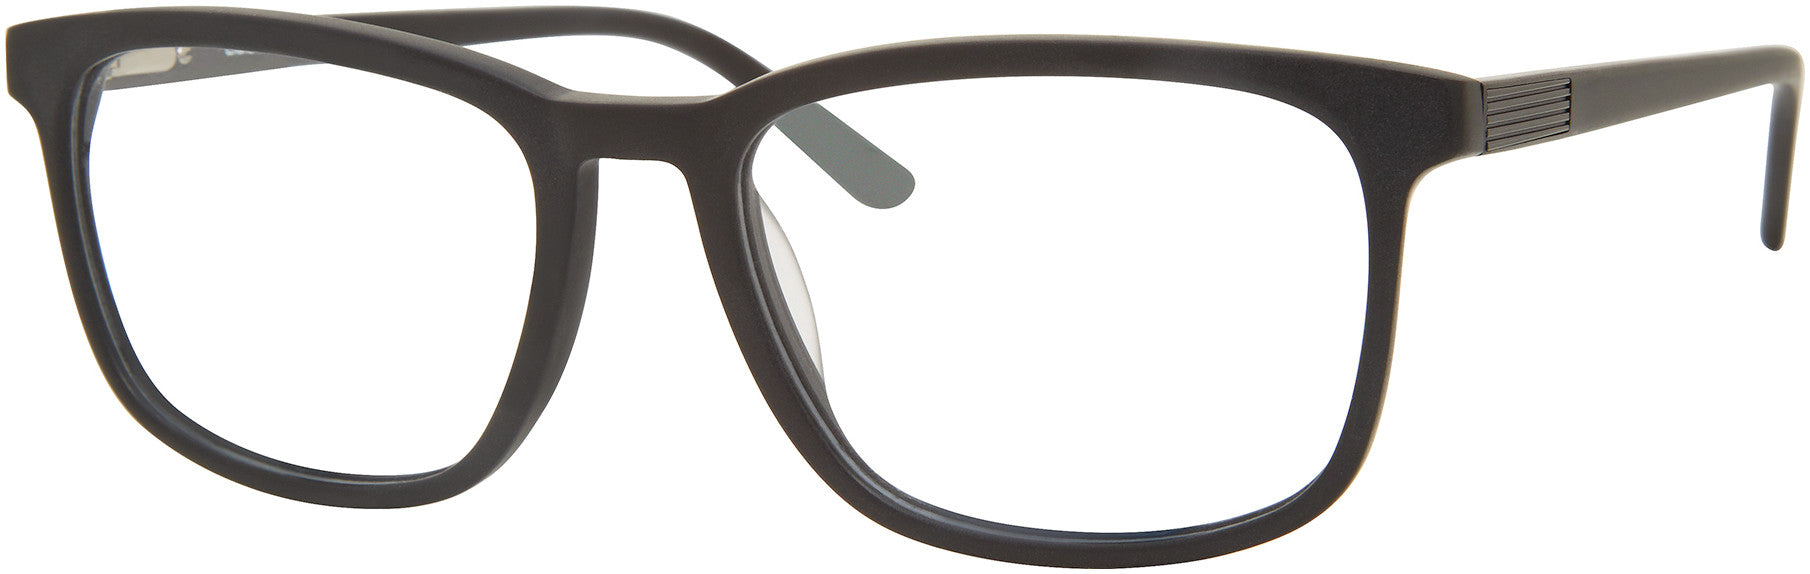  Claiborne 320 Rectangular Eyeglasses 0003-0003  Matte Black (00 Demo Lens)